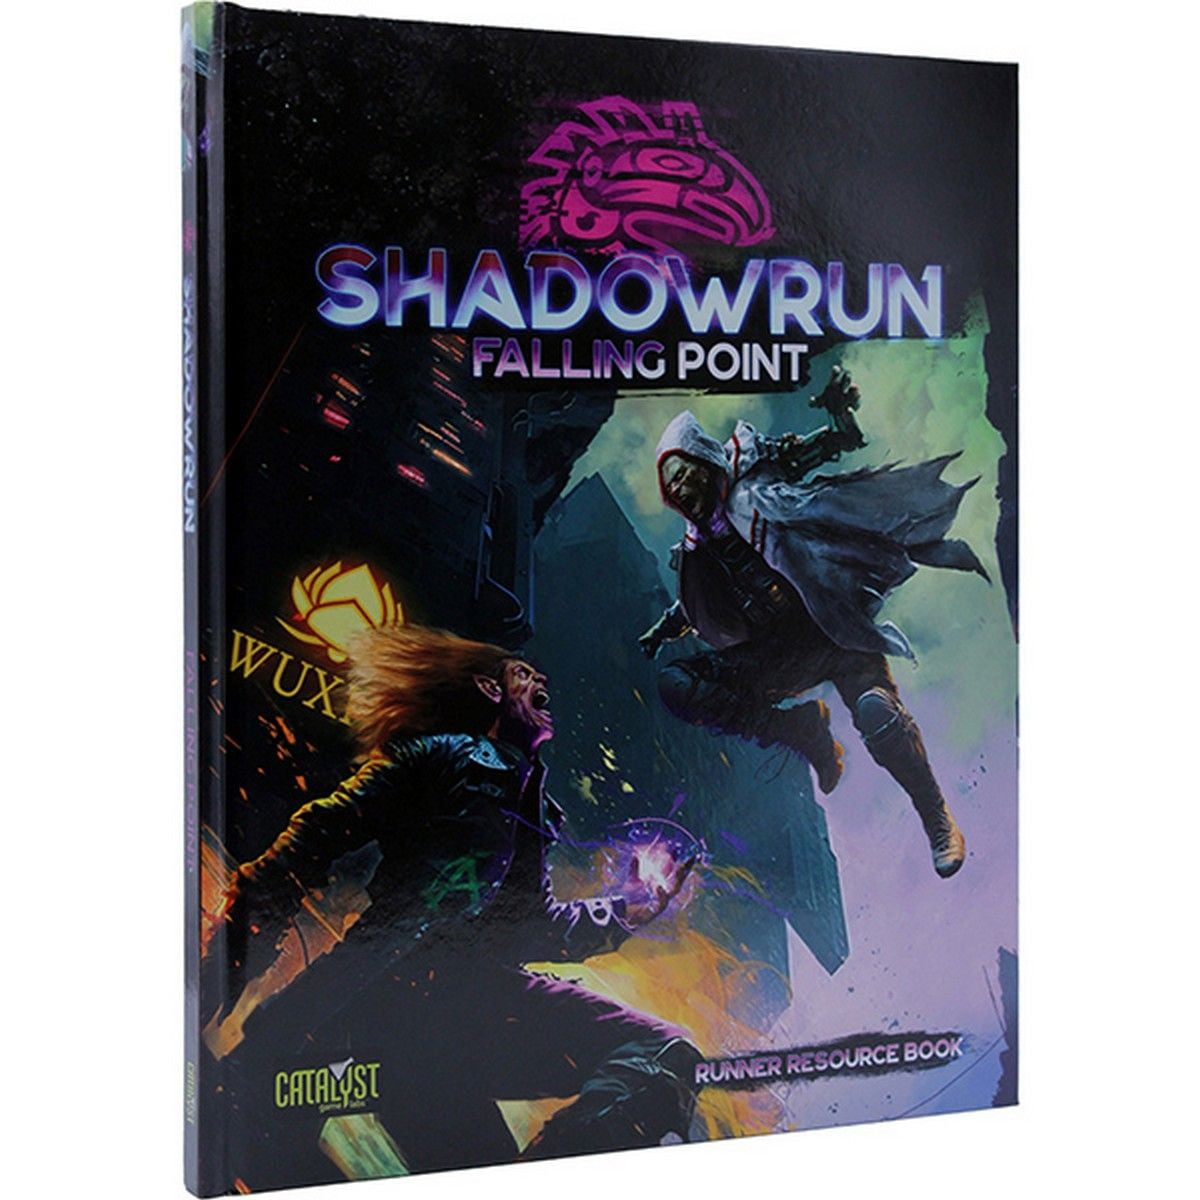 Shadowrun: Falling Point